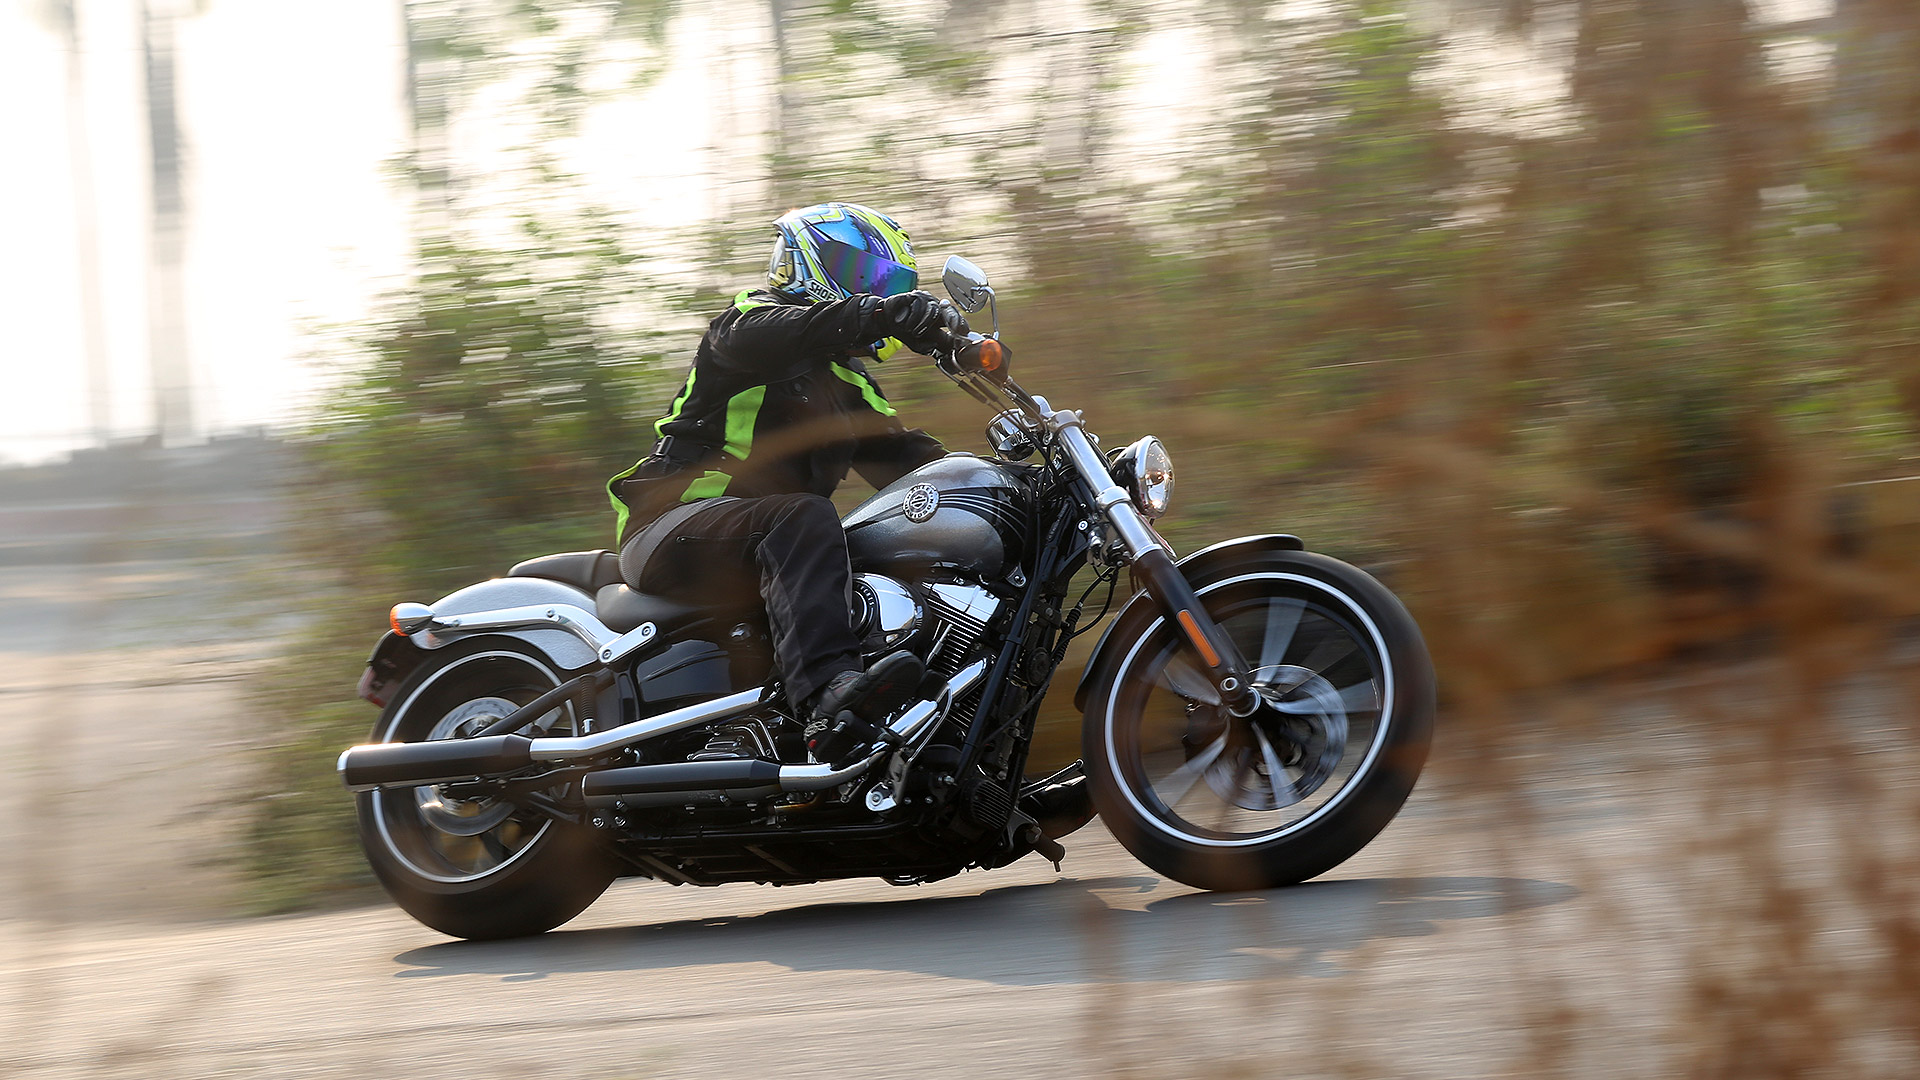 Harley-Davidson Breakout 2015 STD